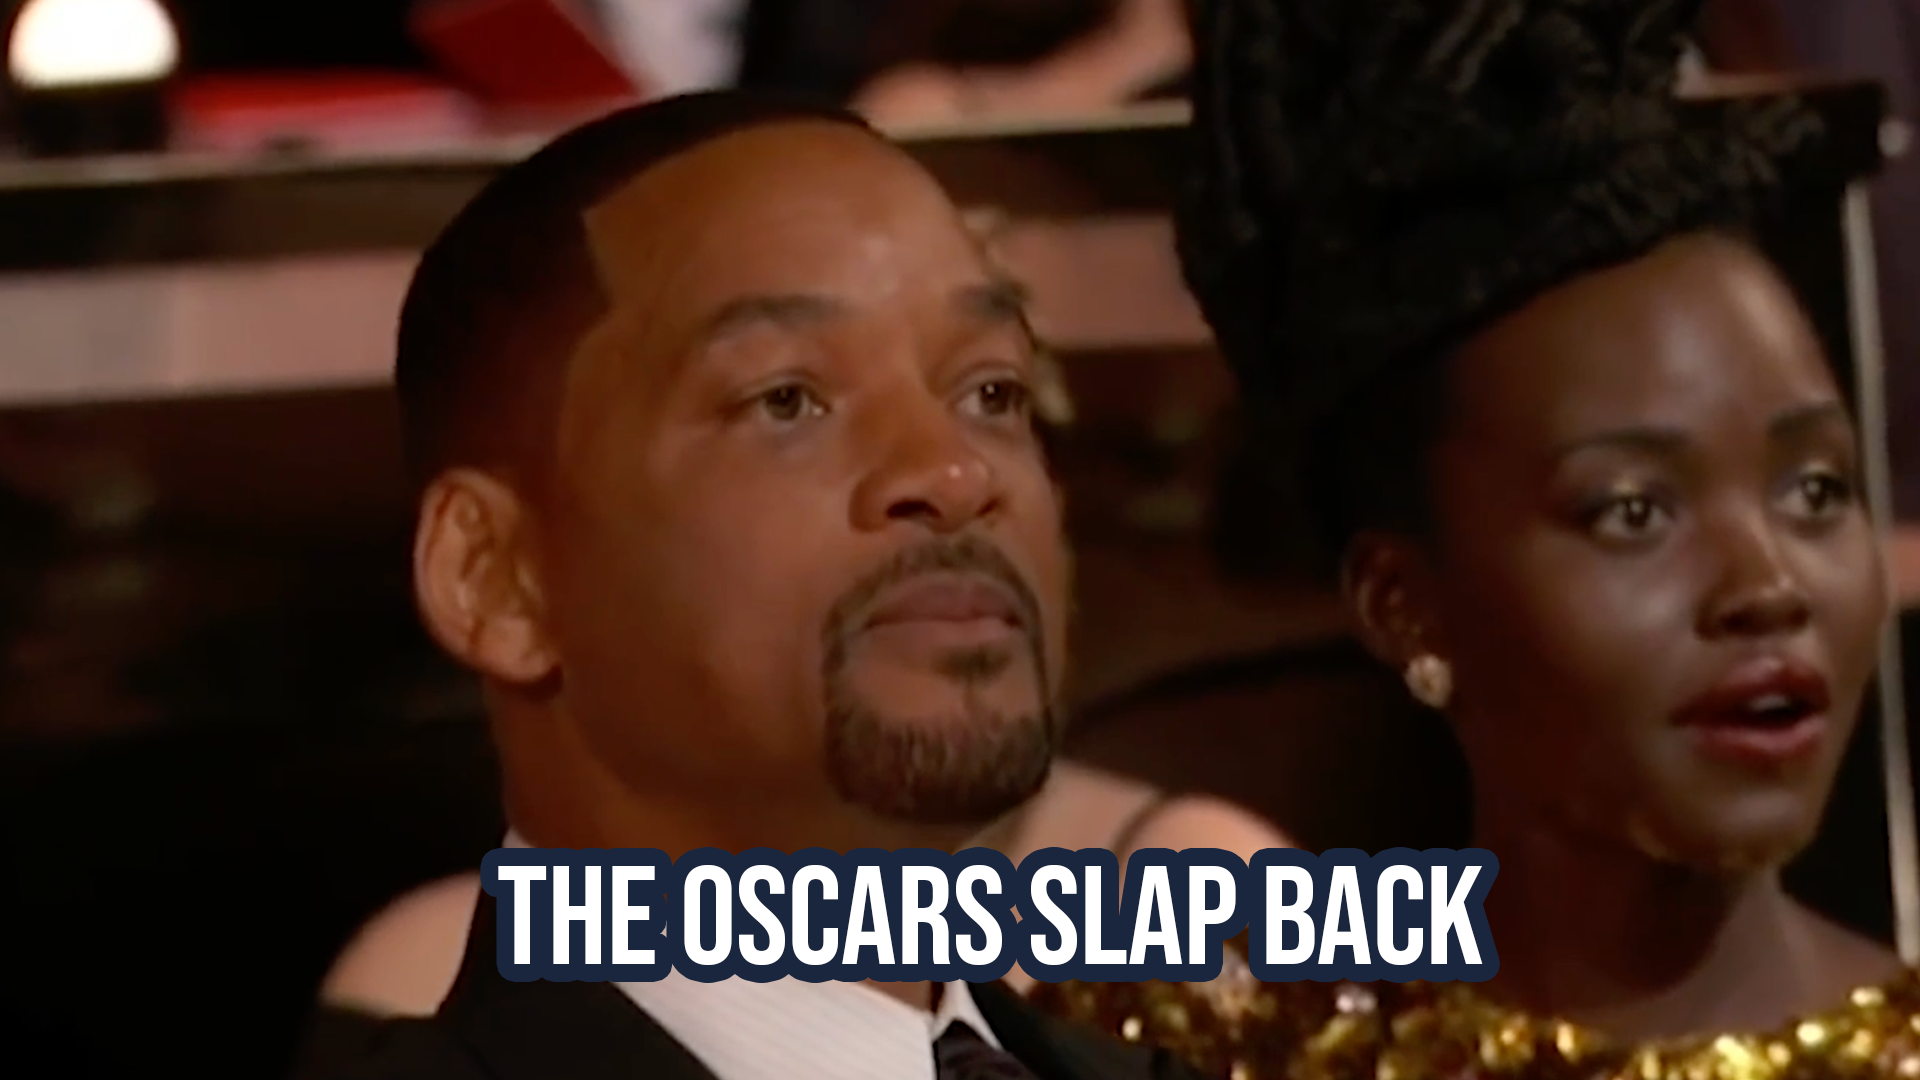 The Oscars slap back